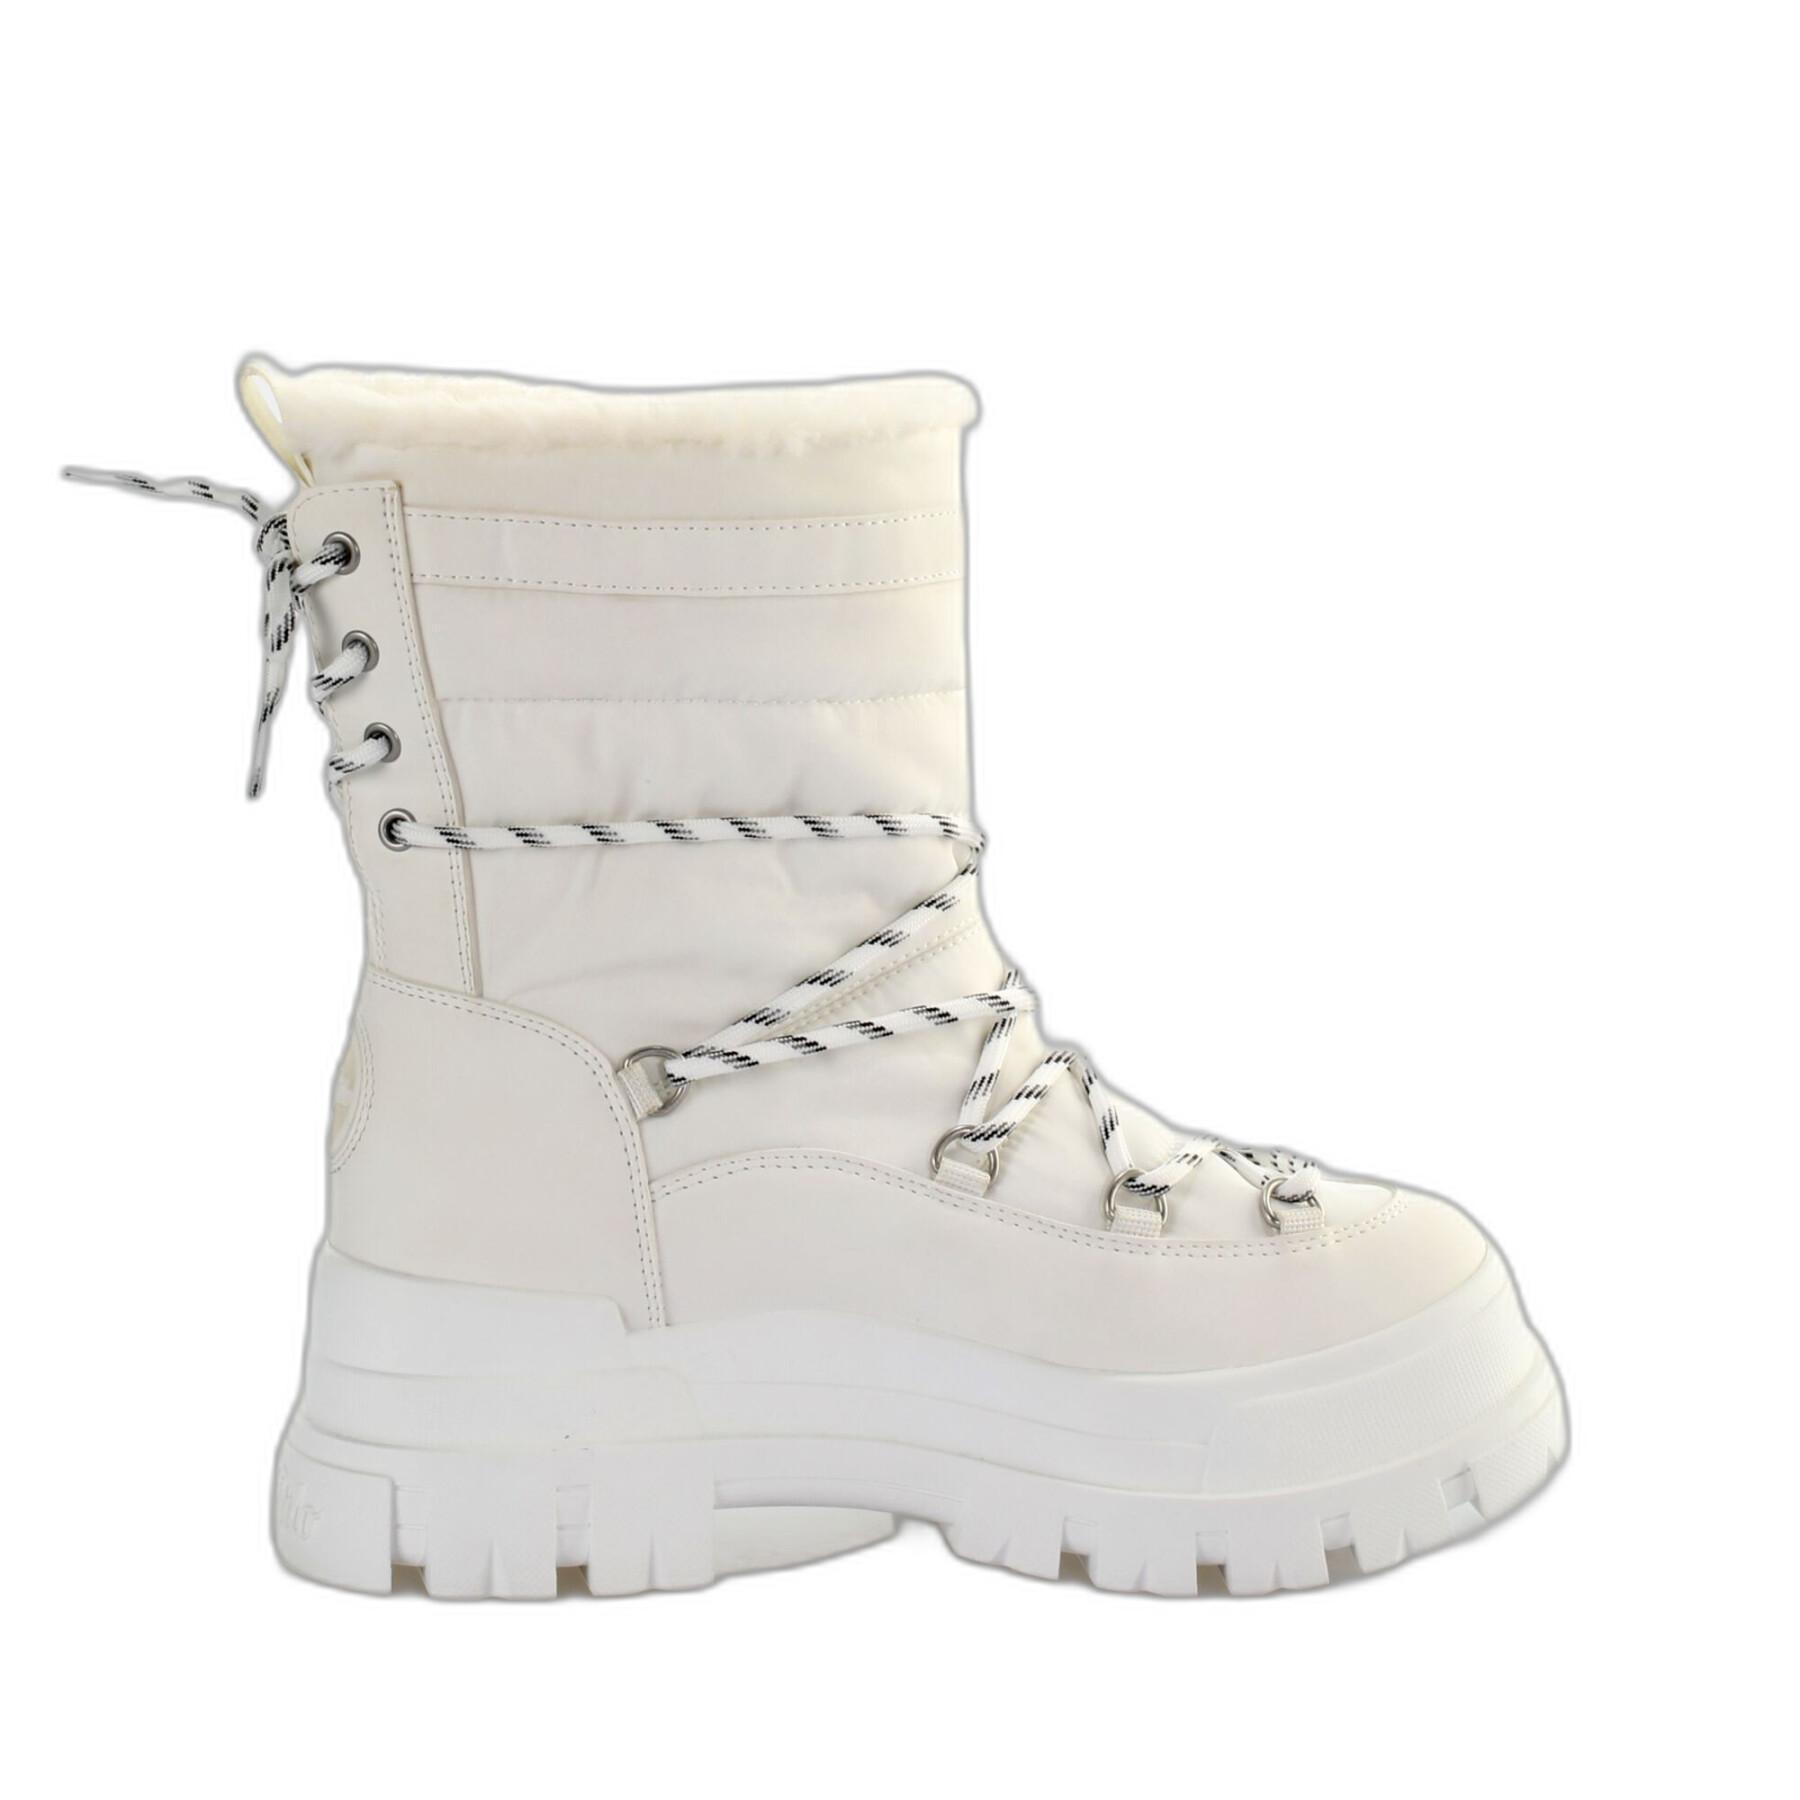 Women's boots Buffalo Aspha Blizzard Warm